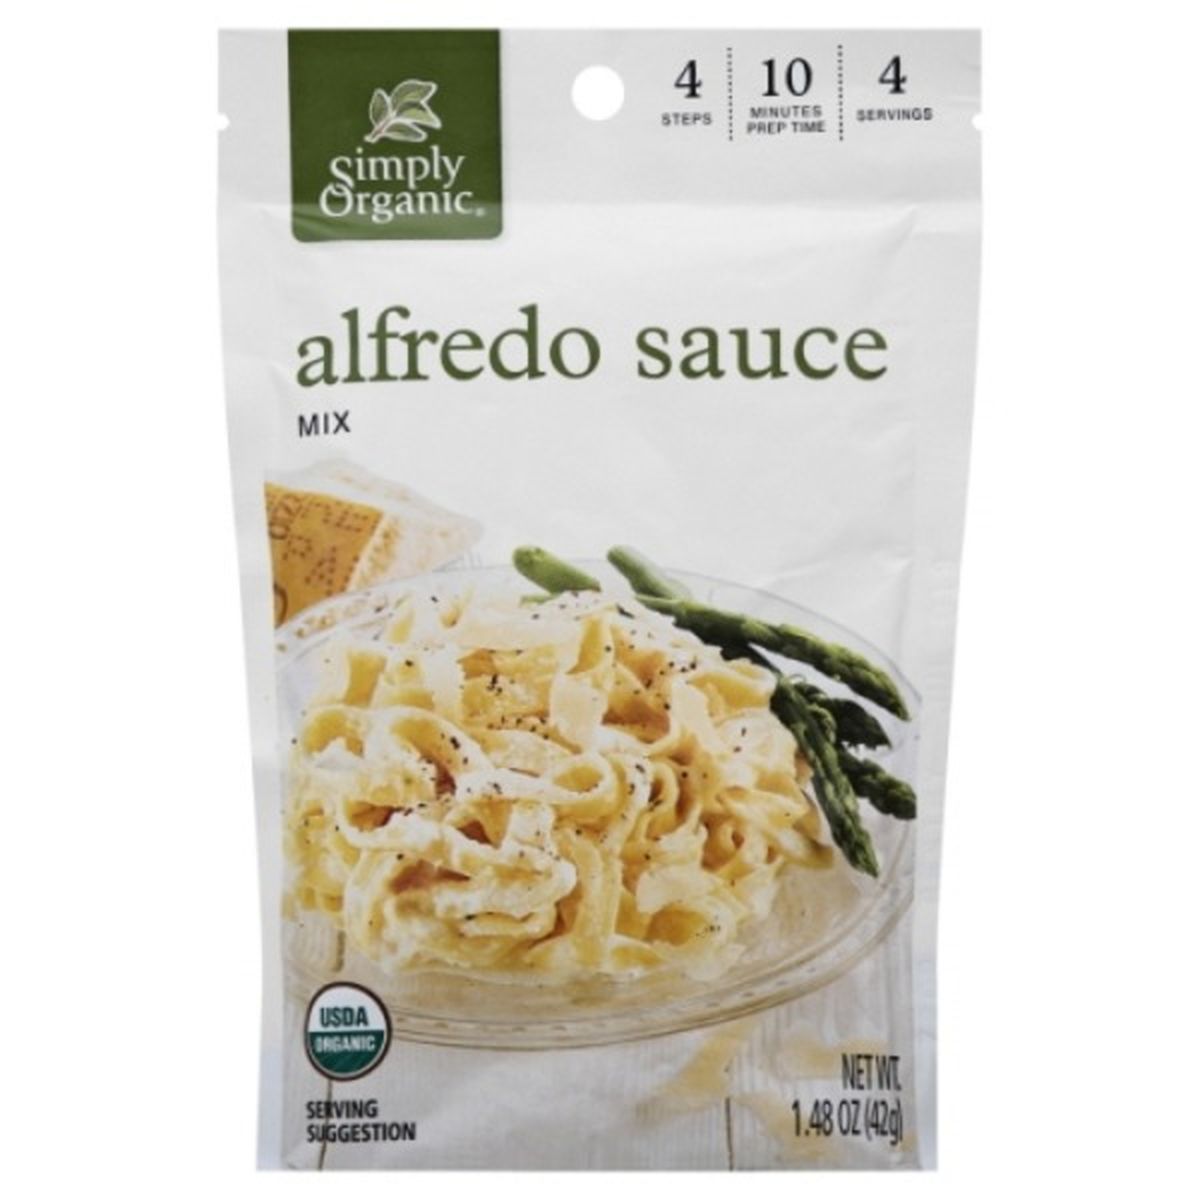 Calories in Simply Organic Alfredo Sauce Mix